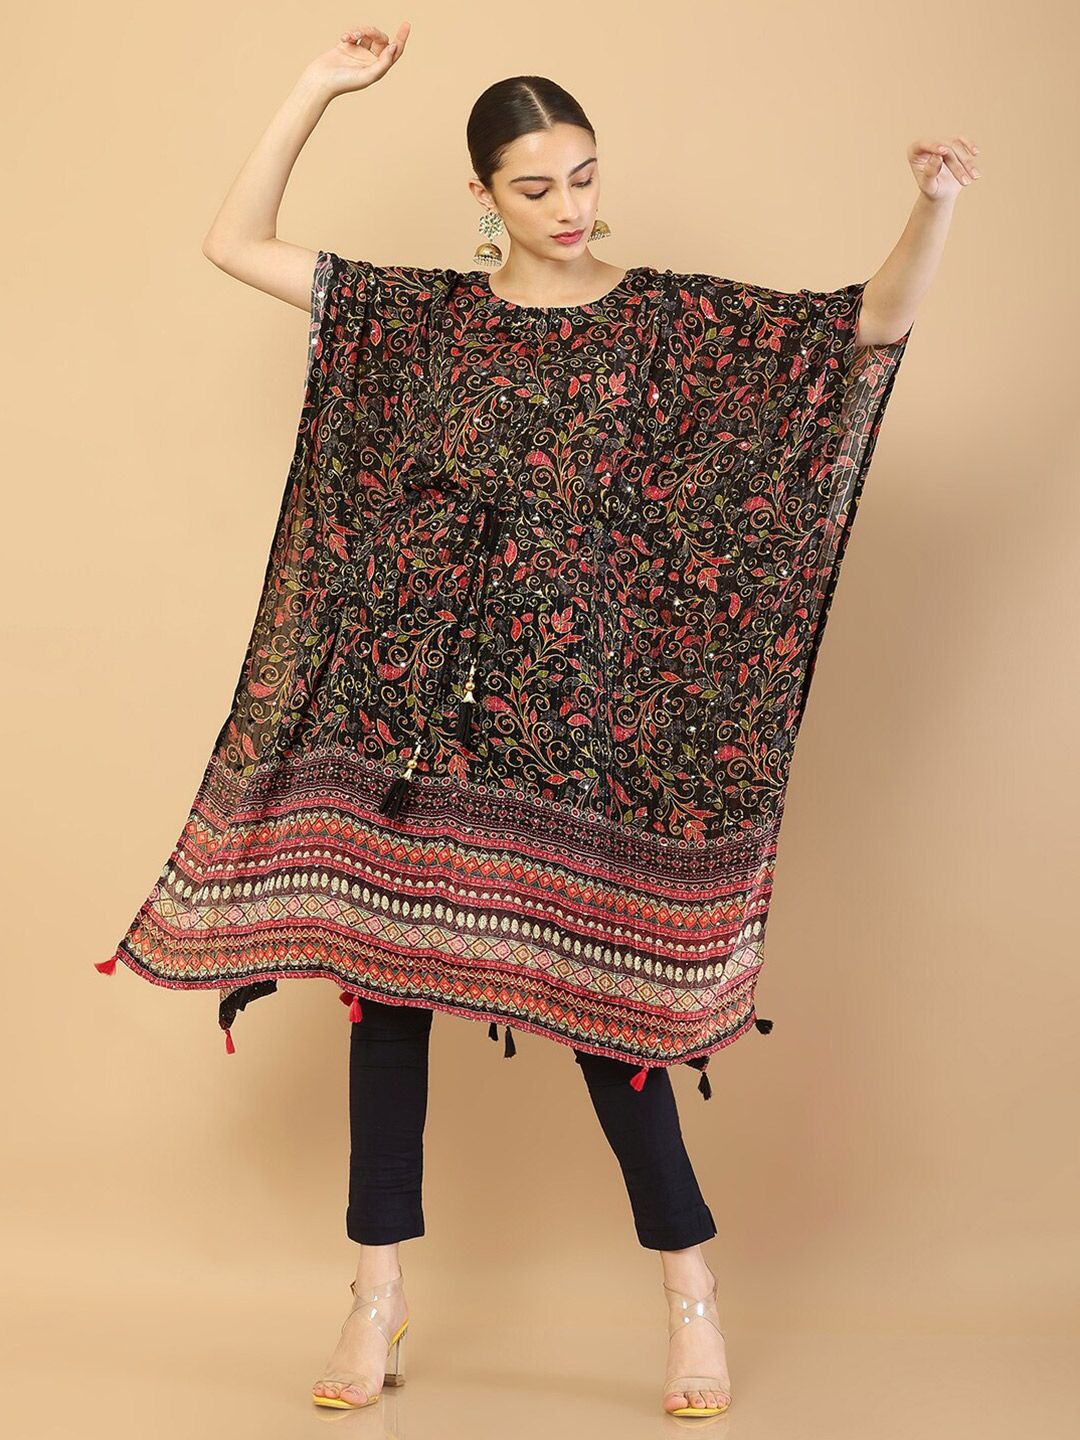 Soch Black Ethnic Motifs Tie-Up Neck A-Line Dress Price in India